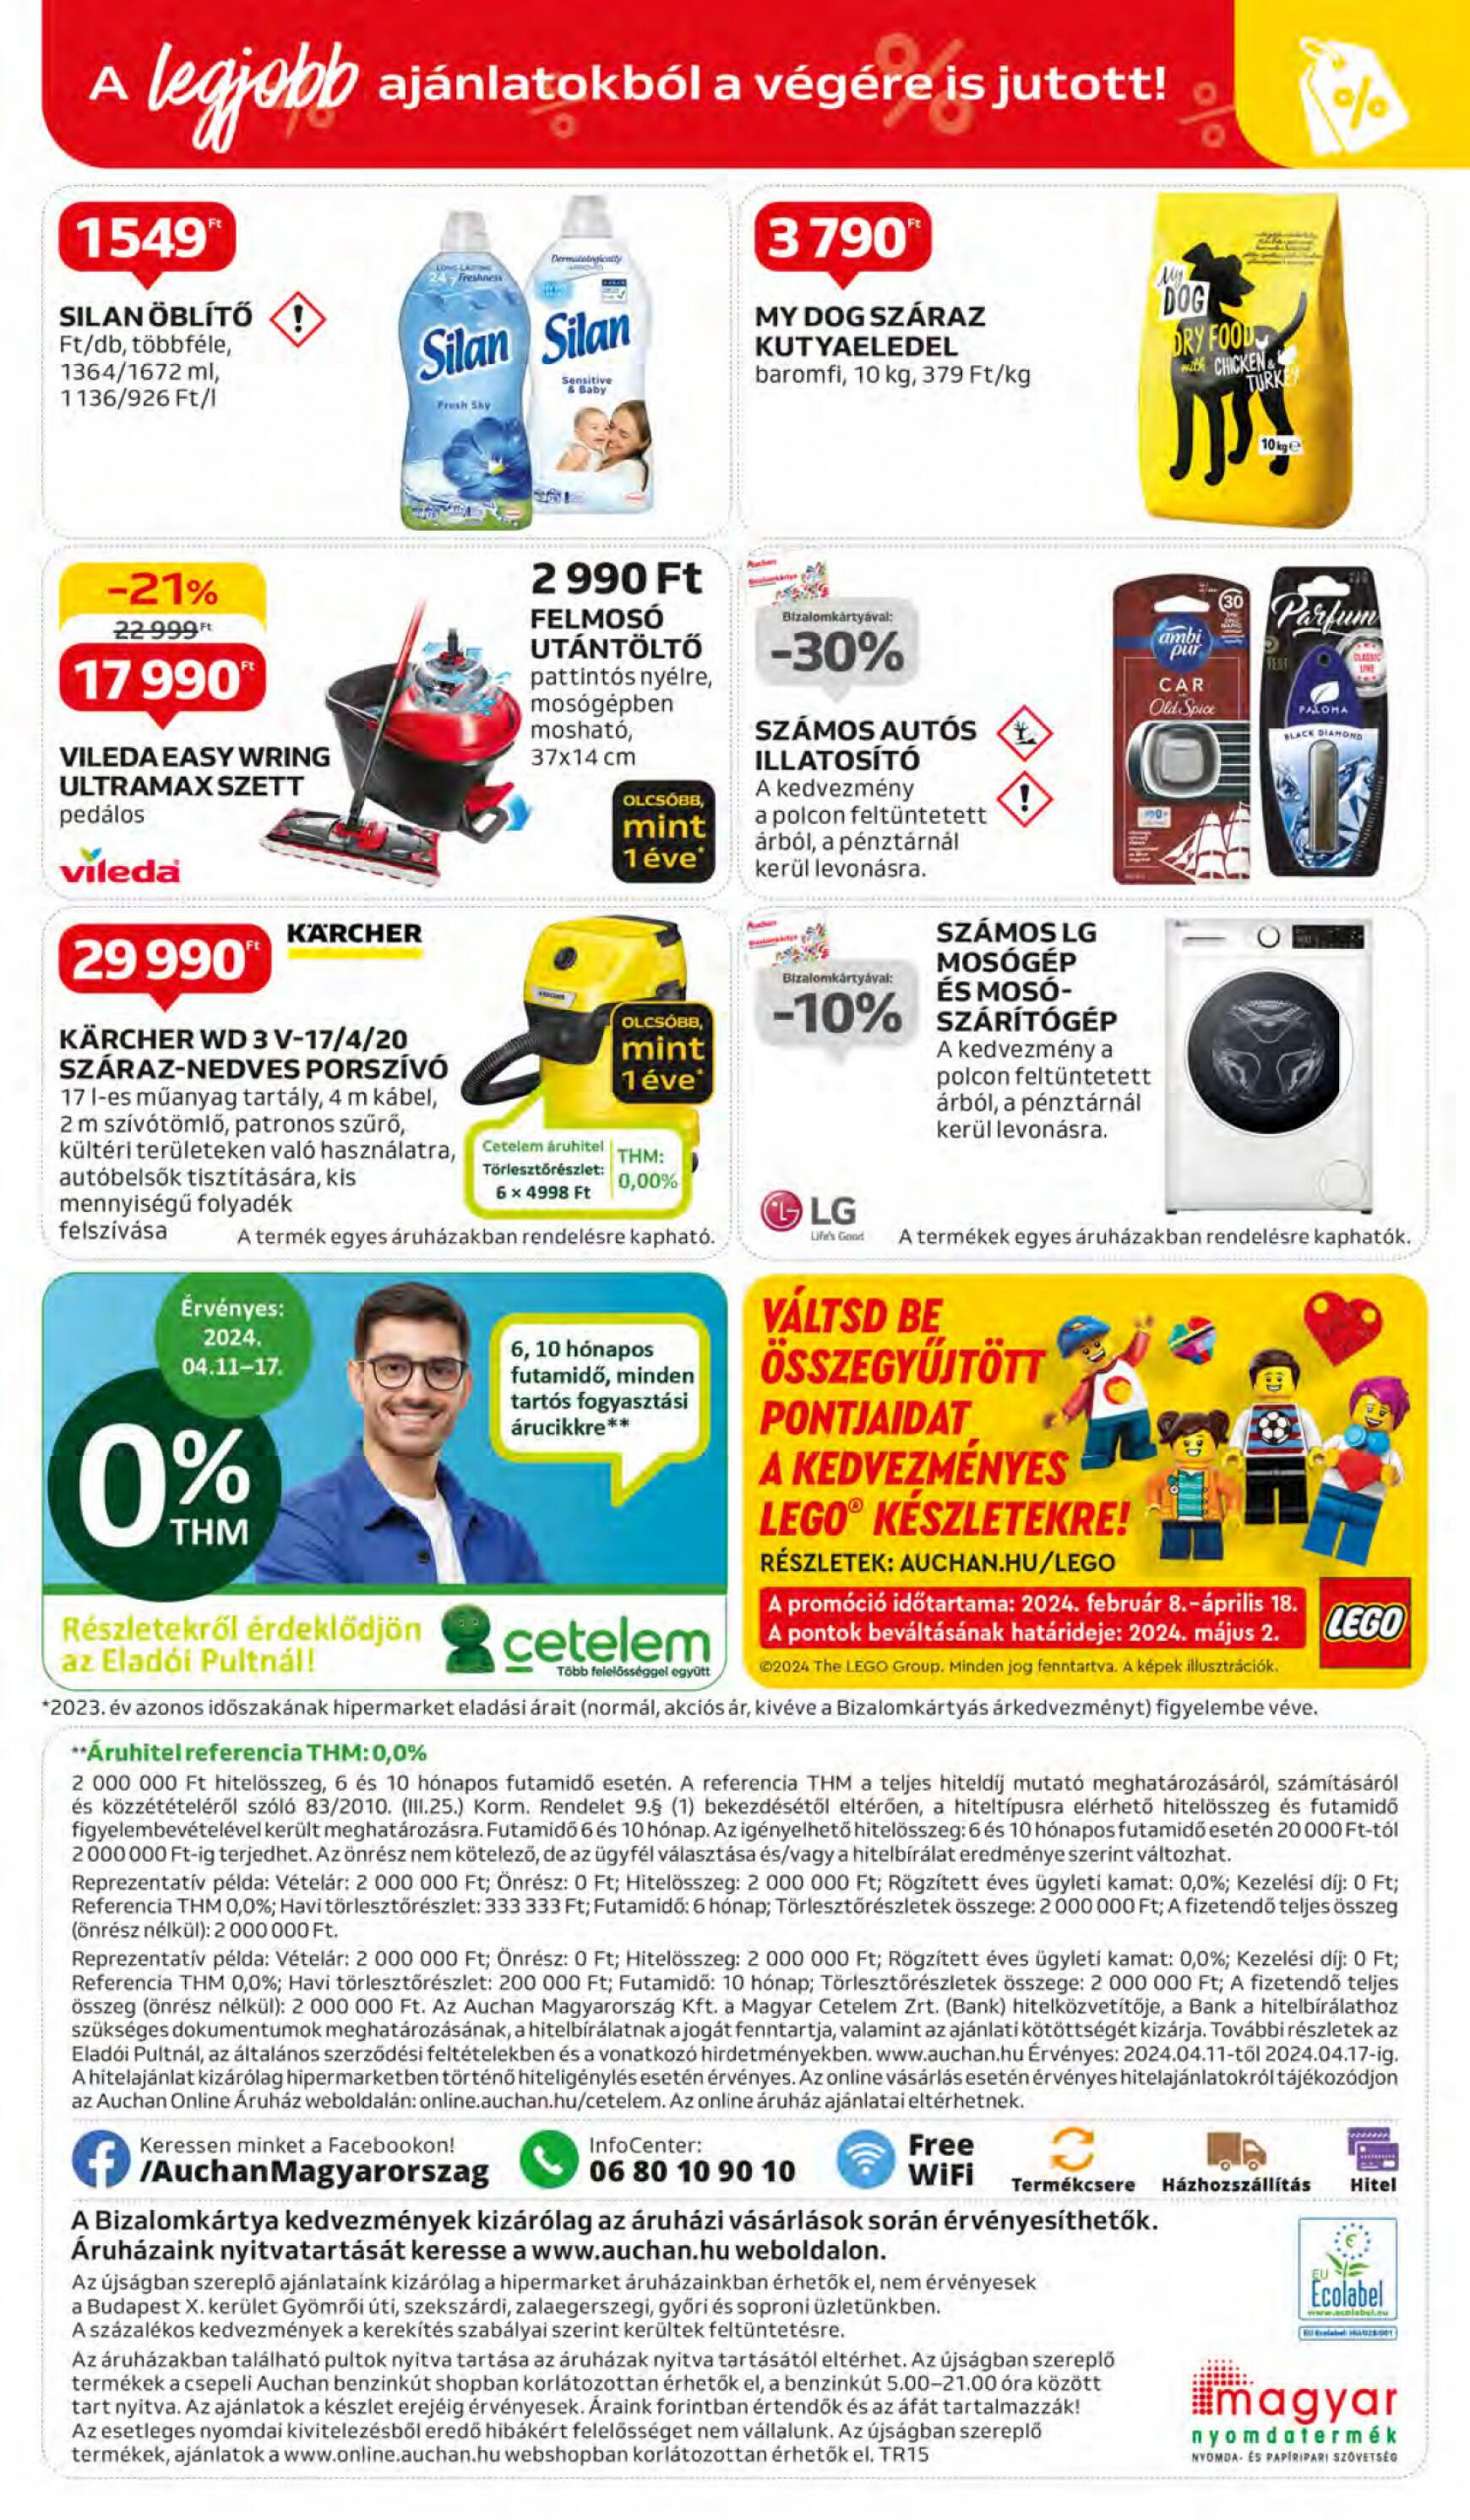 auchan - Aktuális újság Auchan 04.11. - 04.17. - page: 54